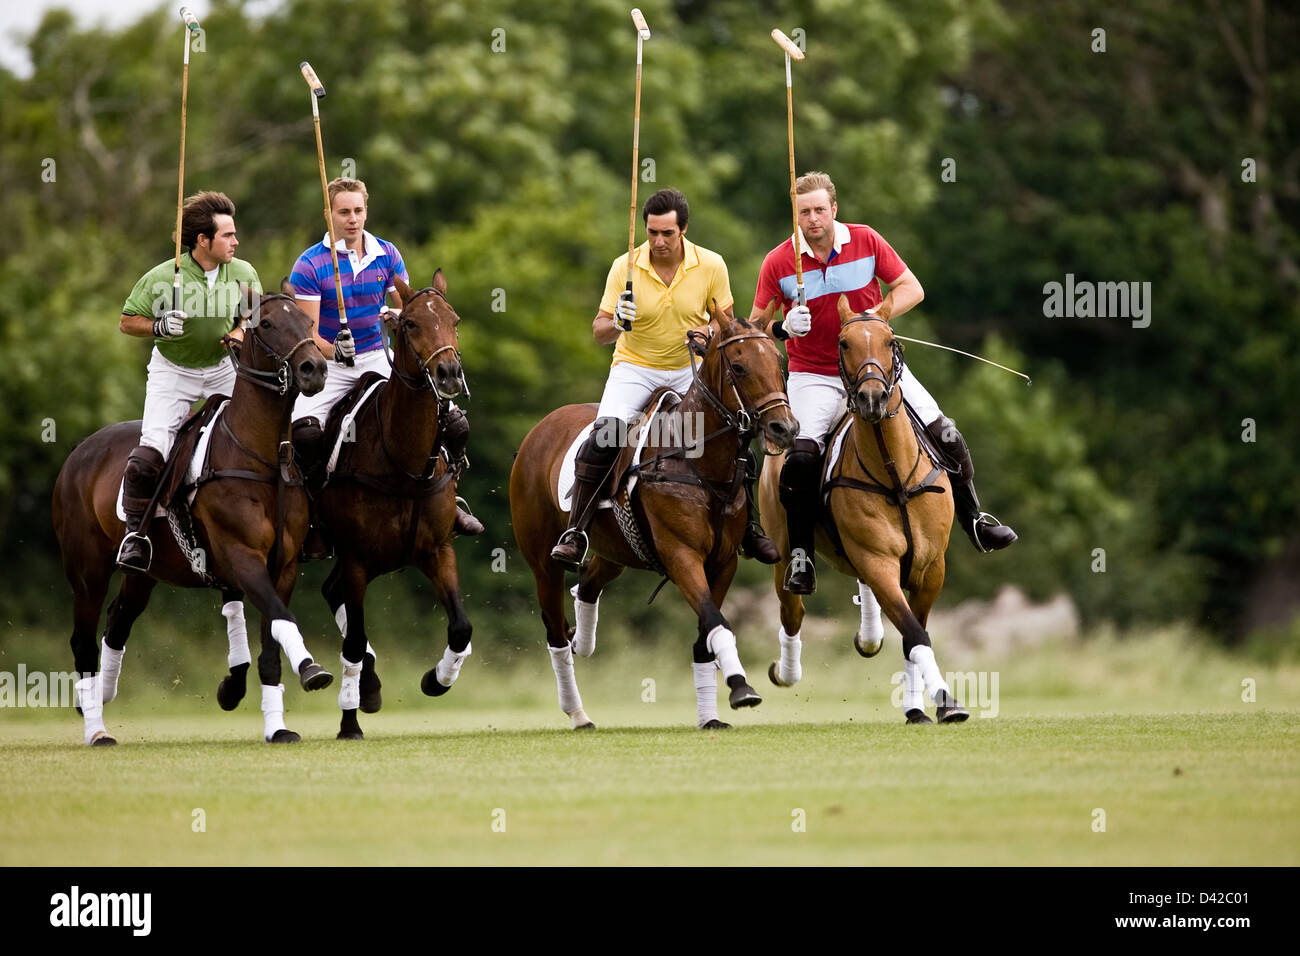 Polo players on horseback, rivalry Stock Photo